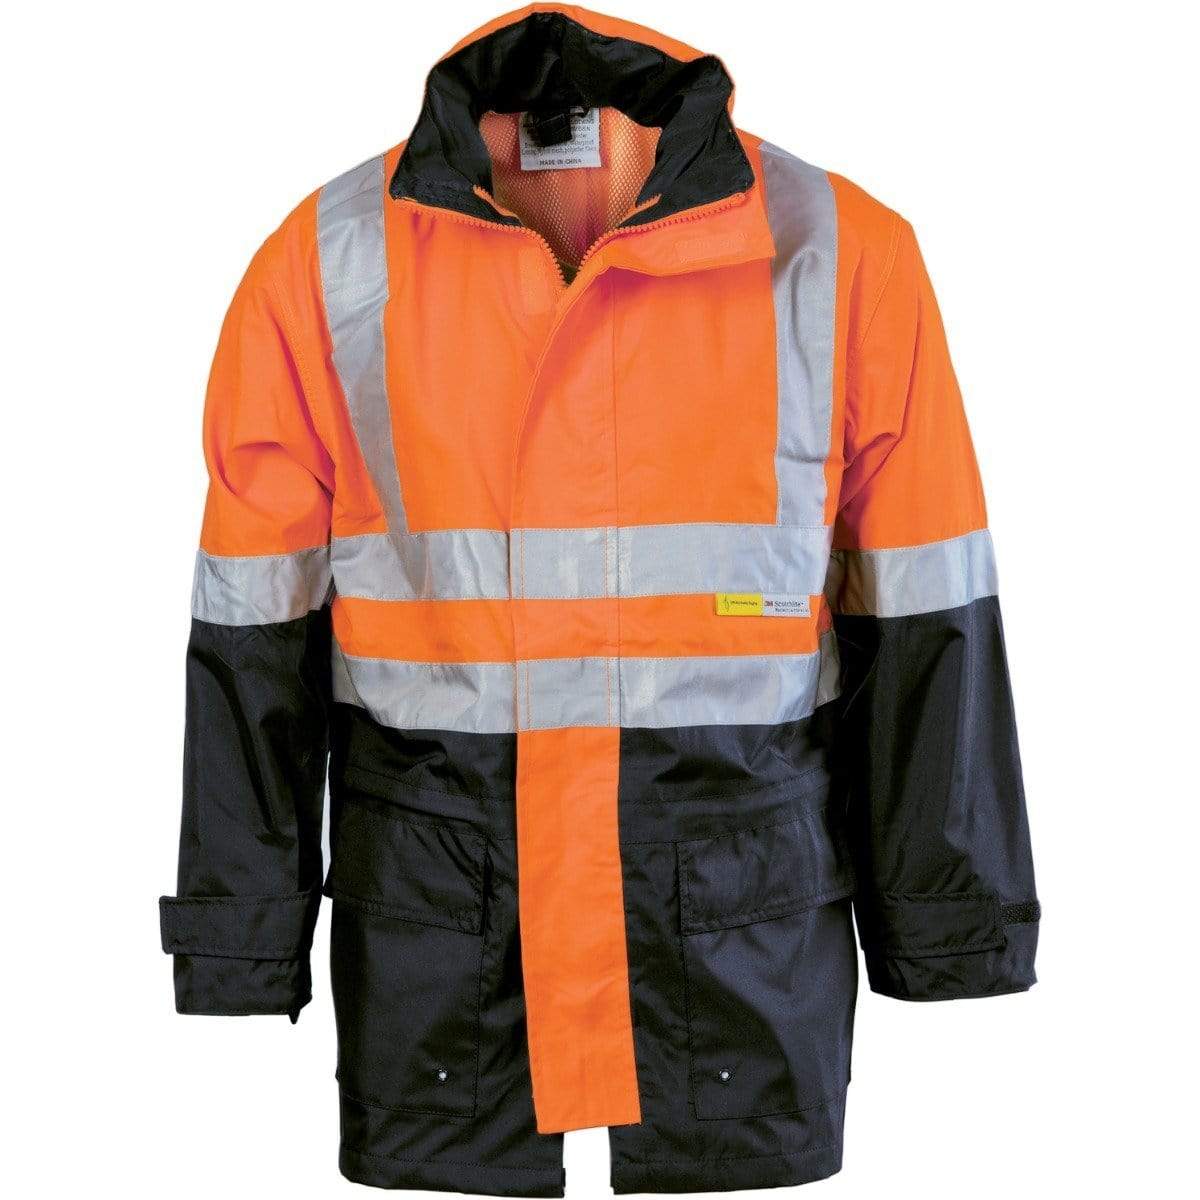 Dnc Workwear Hi-vis Two Tone Breathable Rain Jacket With 3m Reflective Tape - 3867 Work Wear DNC Workwear Orange/Navy S 